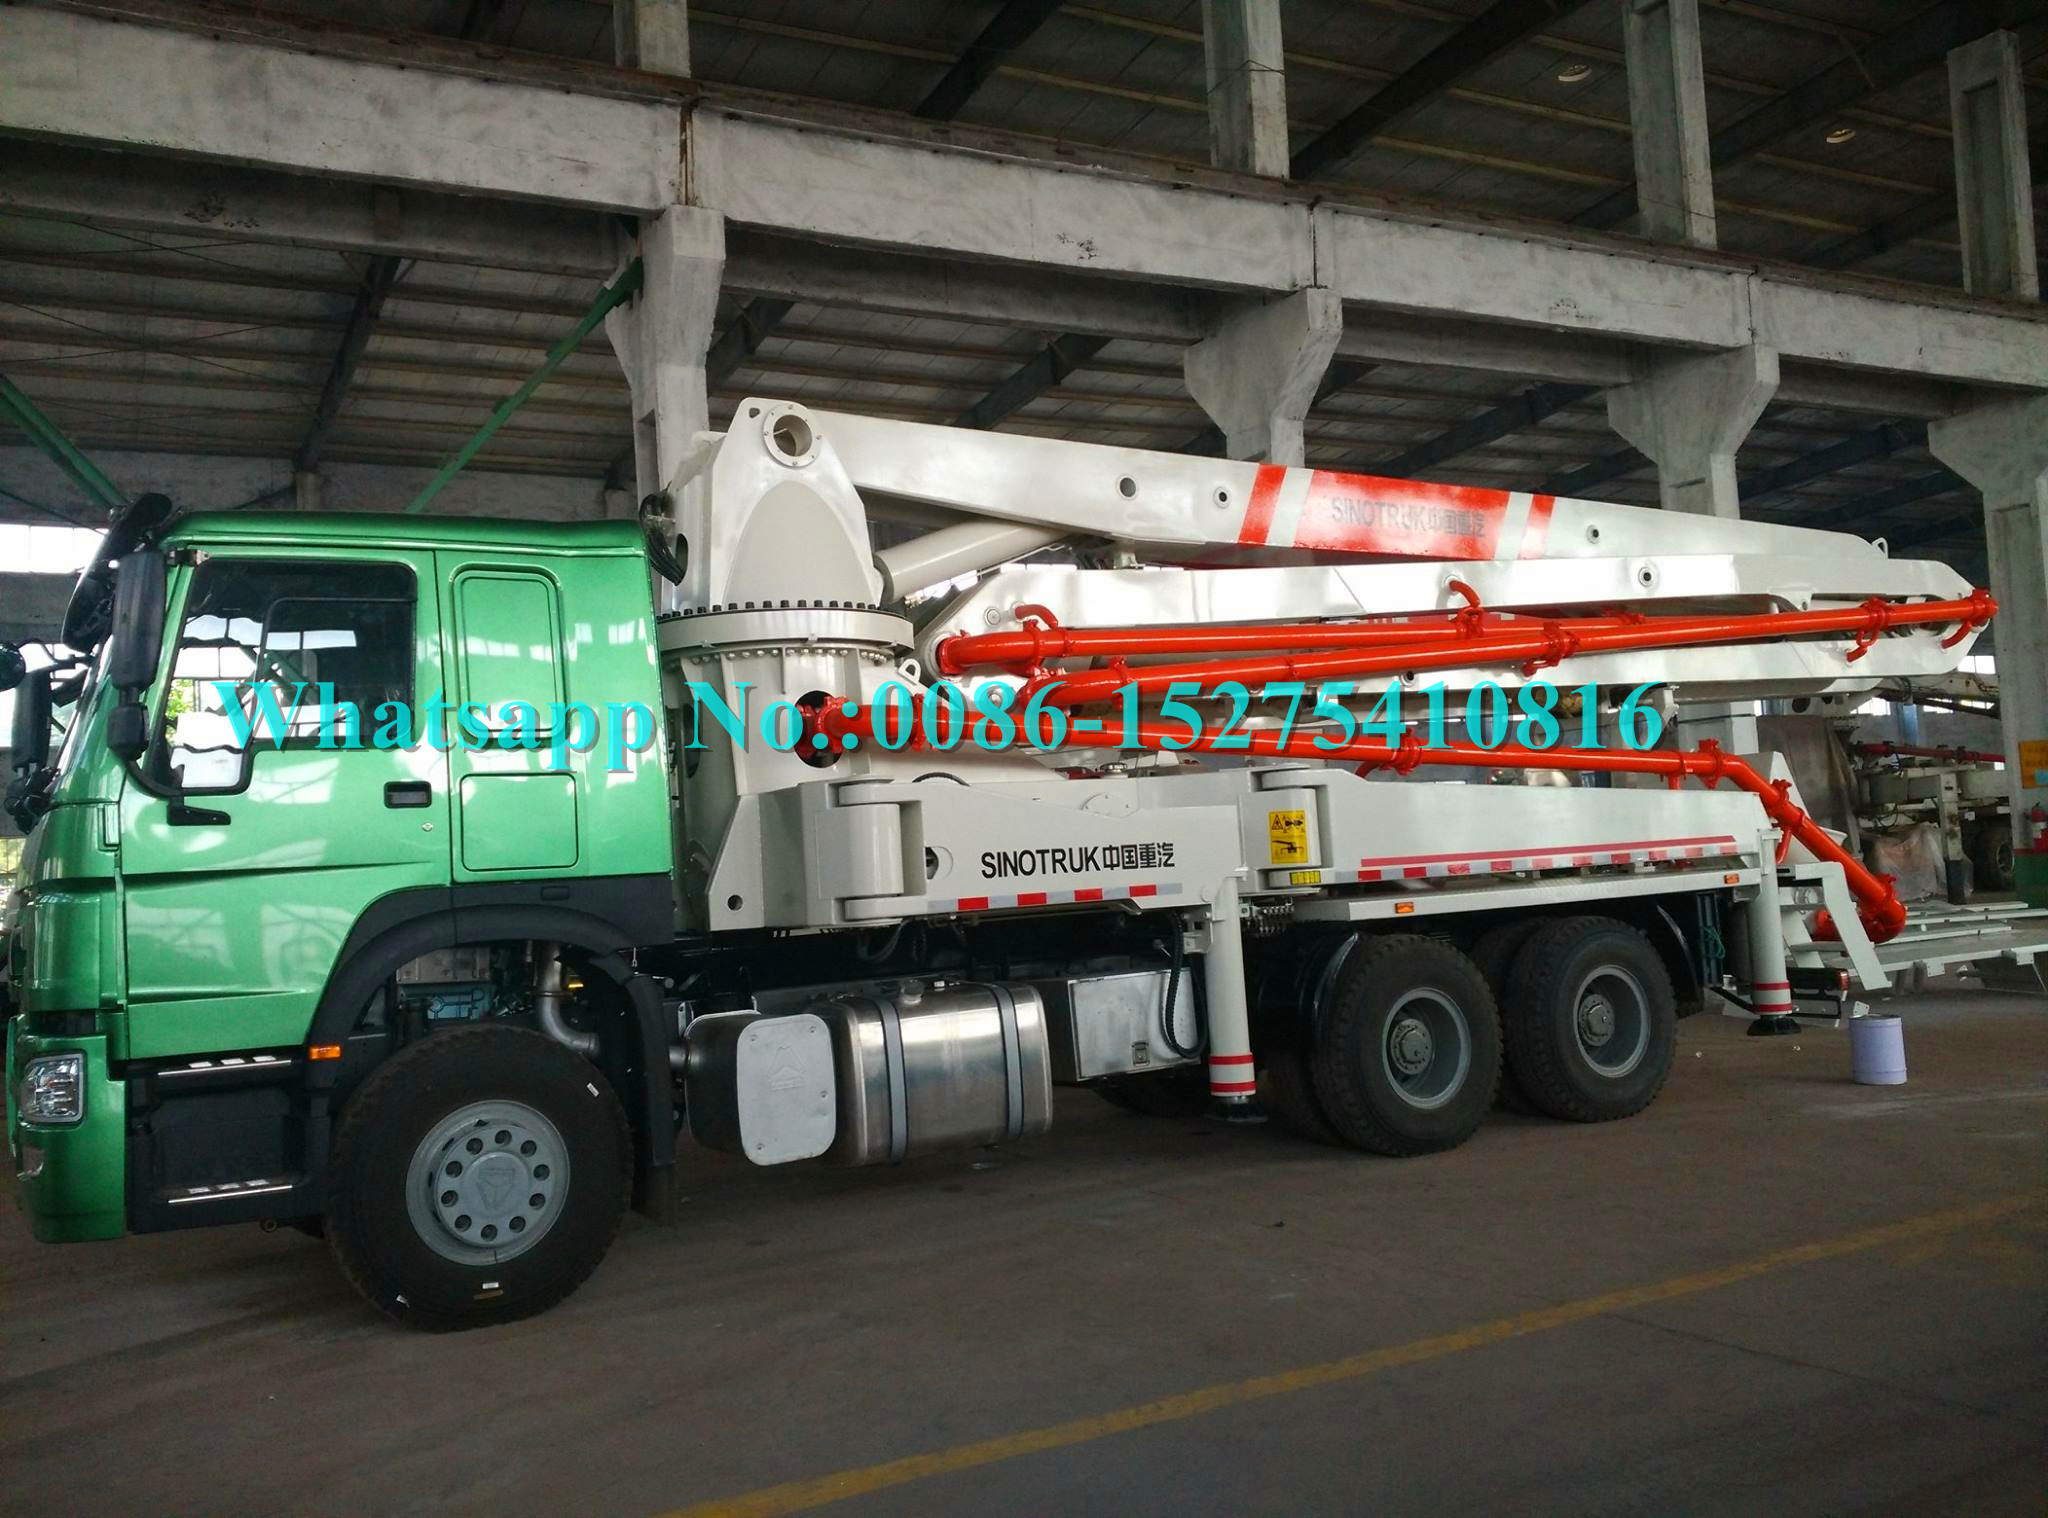 4 Arms Cement Pumping Machine / Concrete Construction Equipment SY5295T 80 Km/H